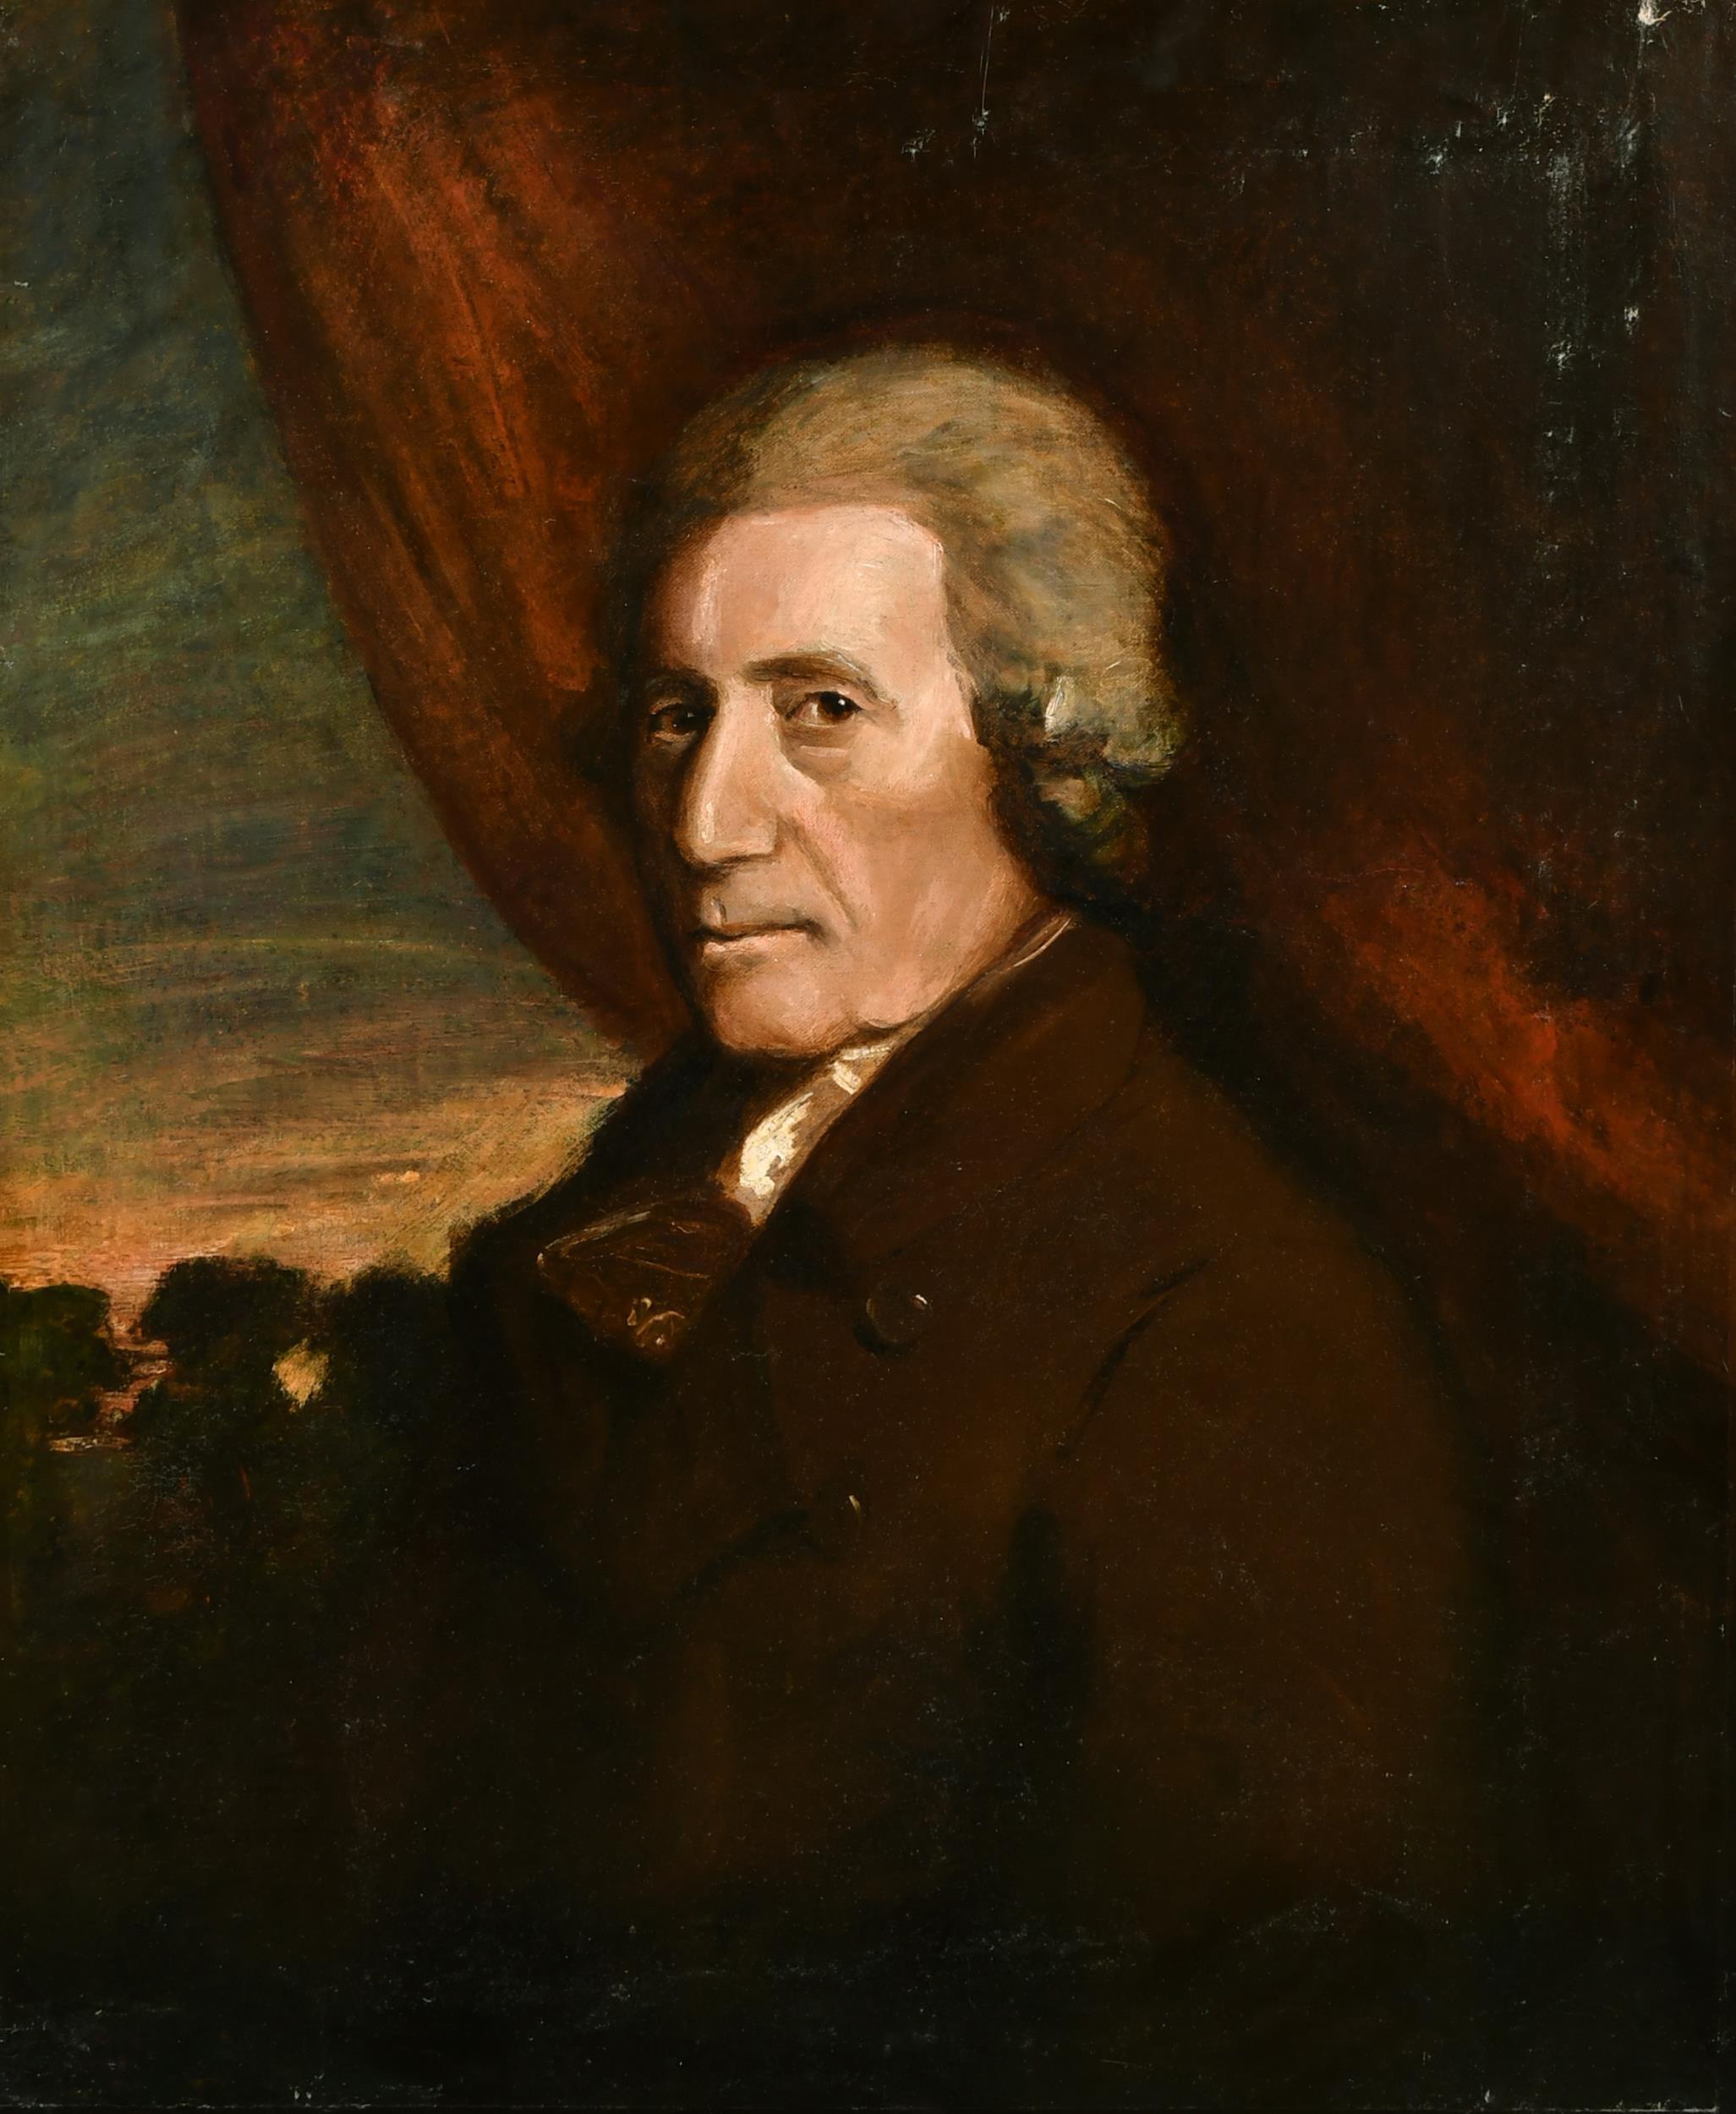 Gilbert Stuart Portrait Painting - Antique Irish Portrait of Distinguished Gentleman, Large 18th Century Painting